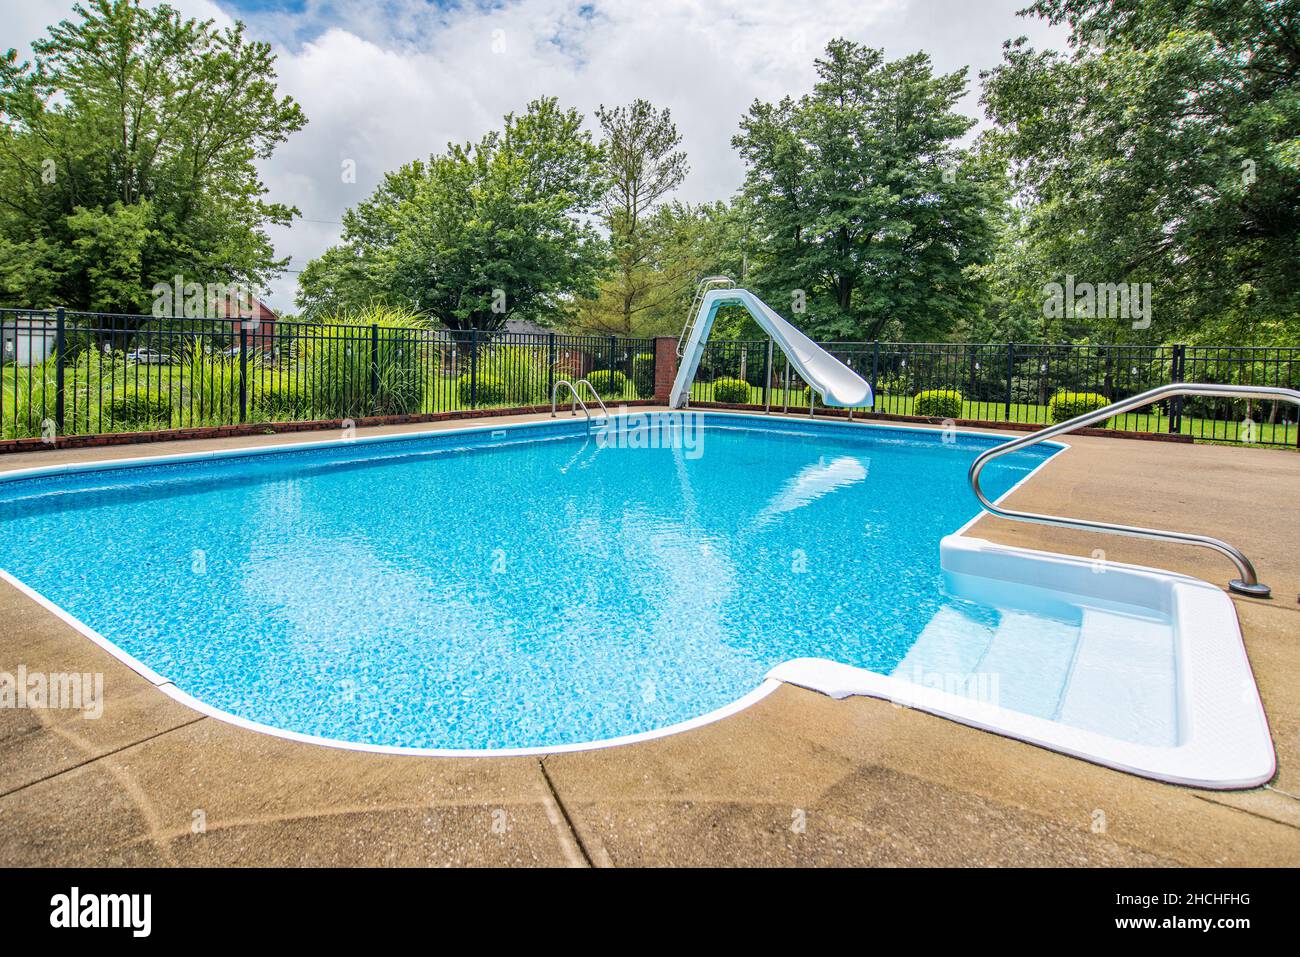 Swimming pool in a backyard of an American home Stock Photo